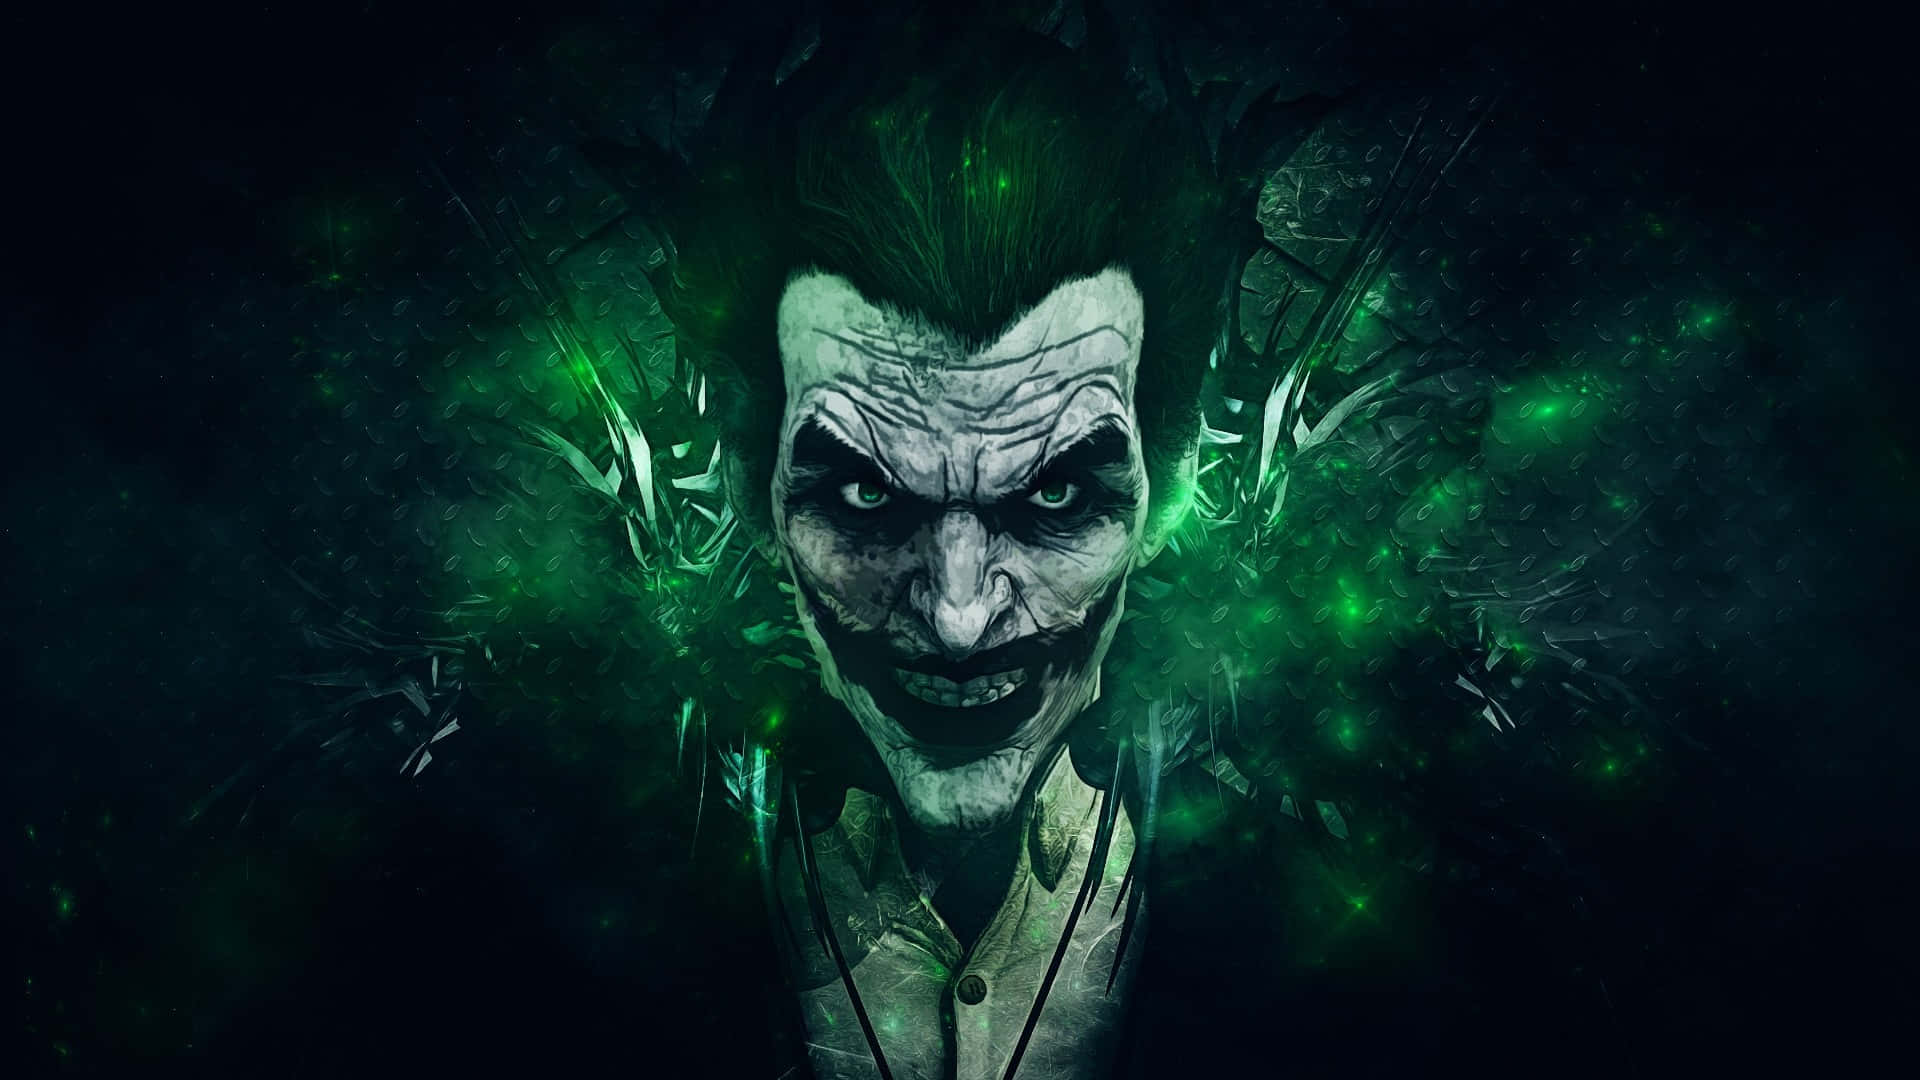 Sinister Dark Joker in the Spotlight Wallpaper